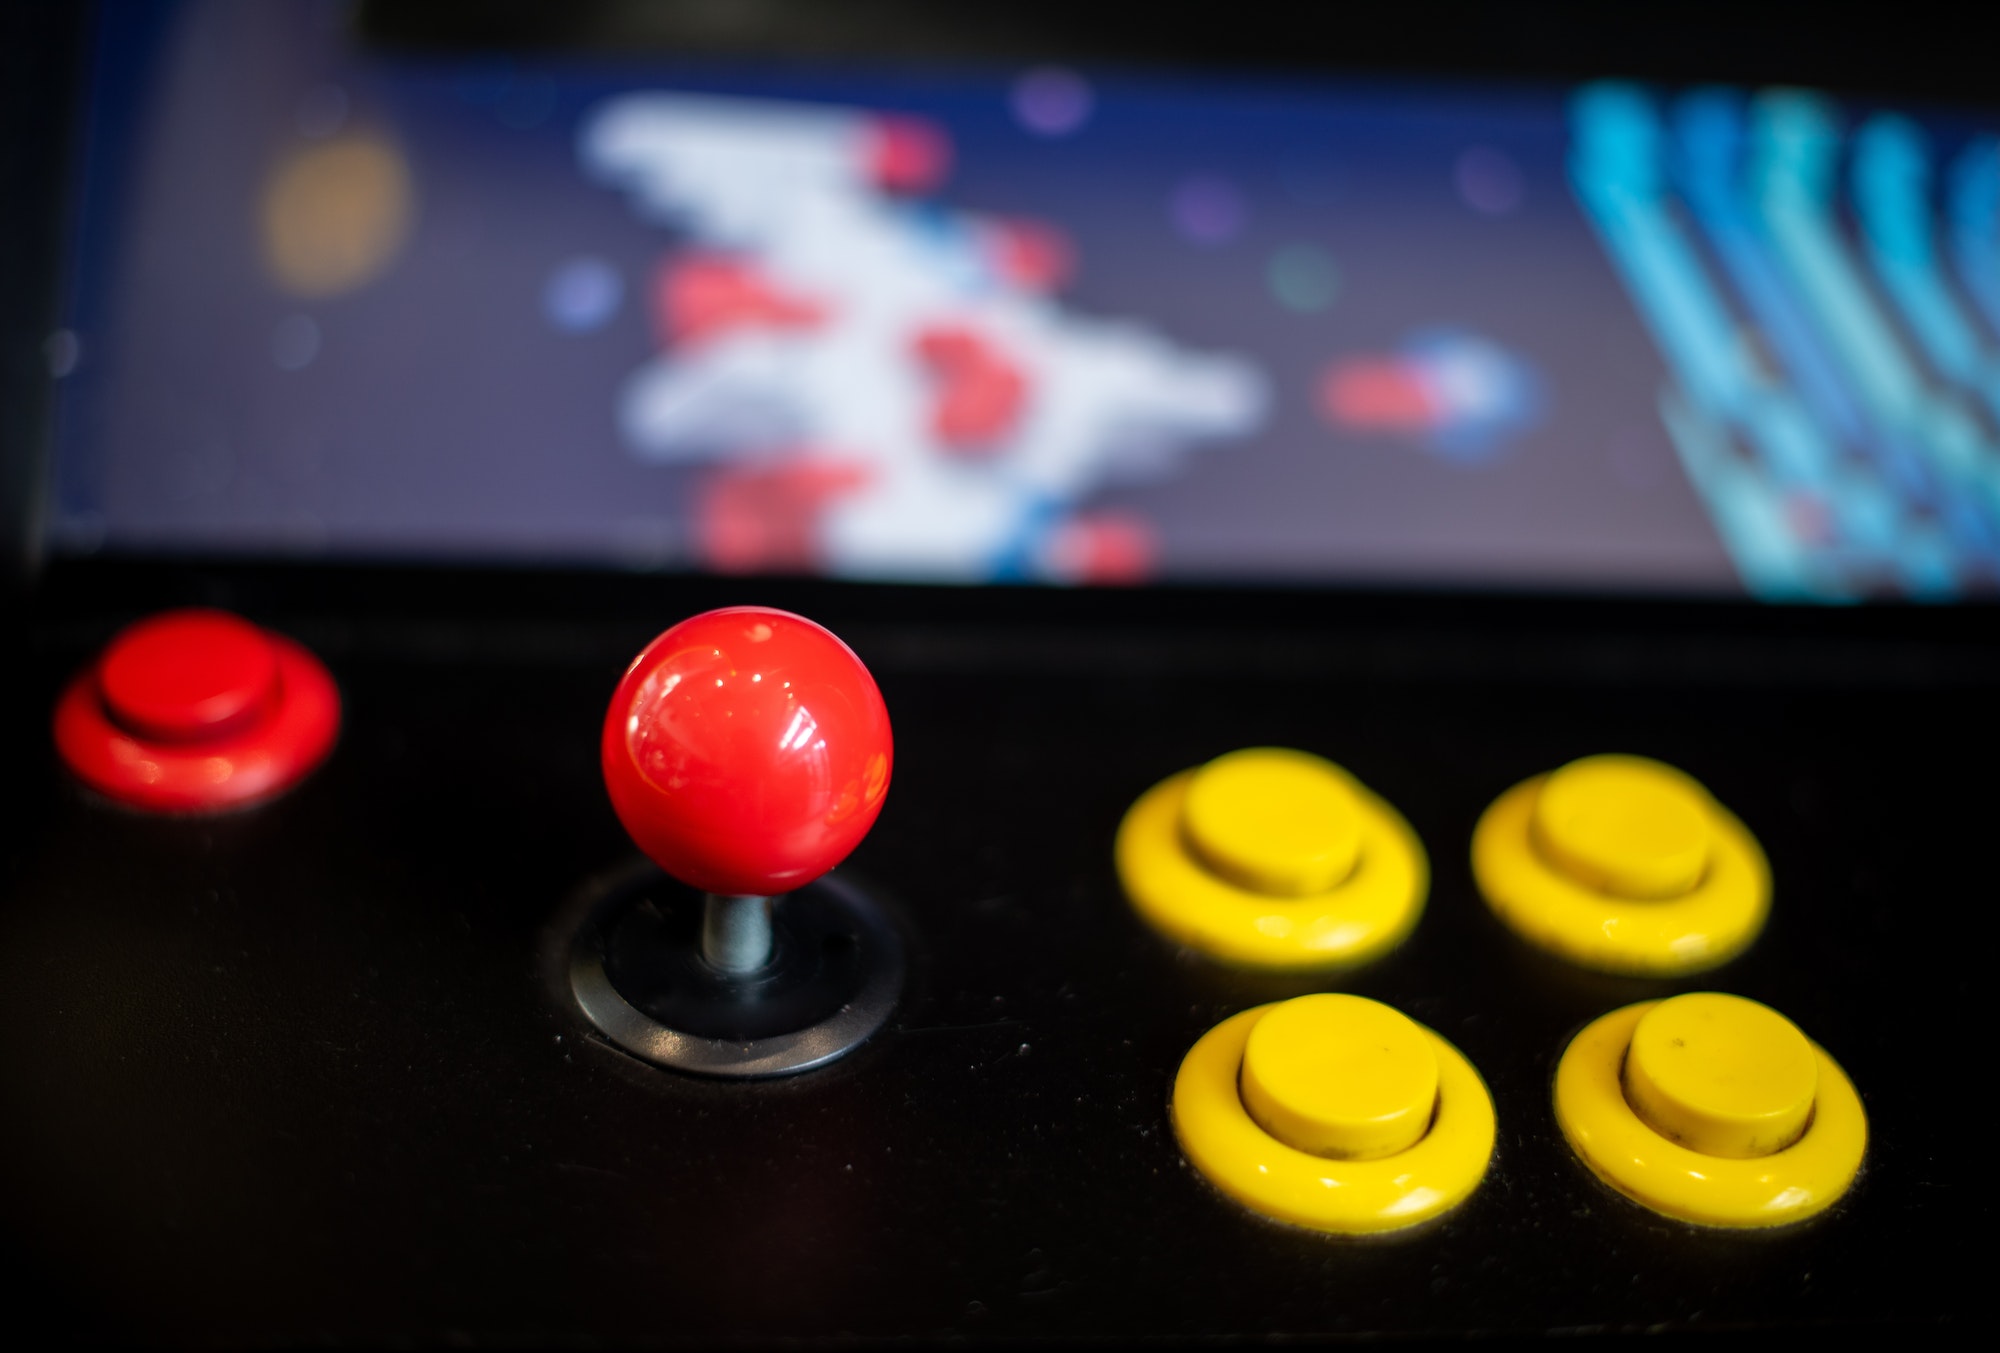 Retro styled arcade games joystick